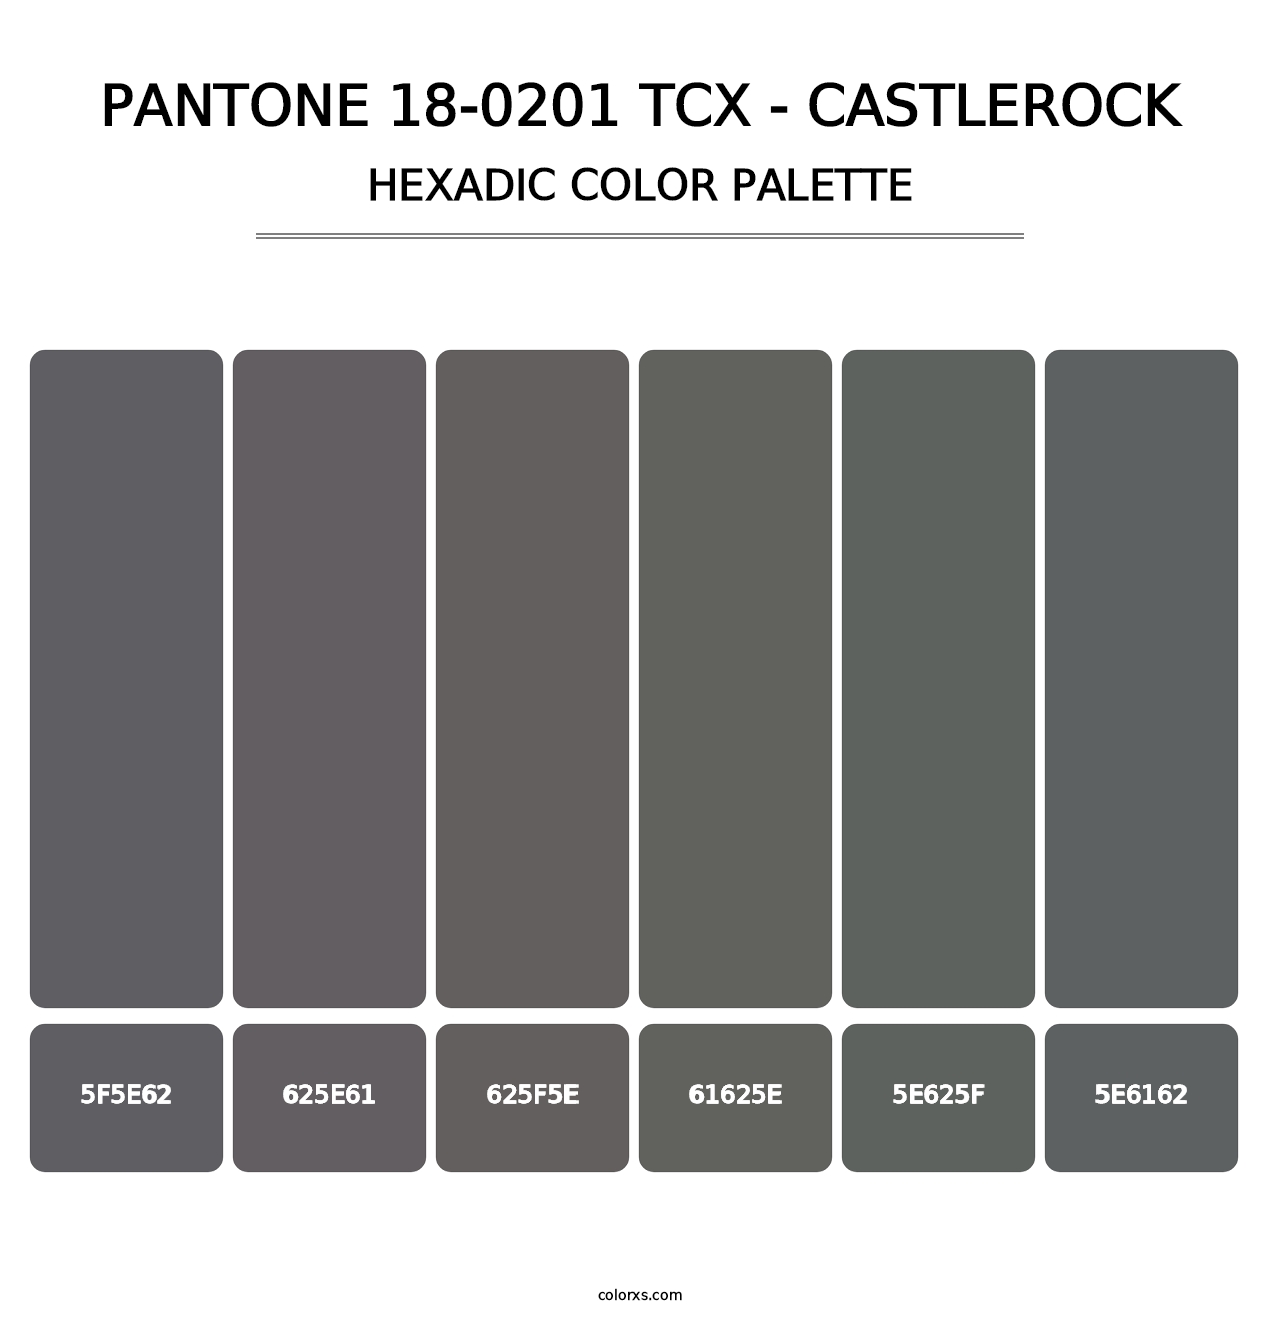 PANTONE 18-0201 TCX - Castlerock - Hexadic Color Palette